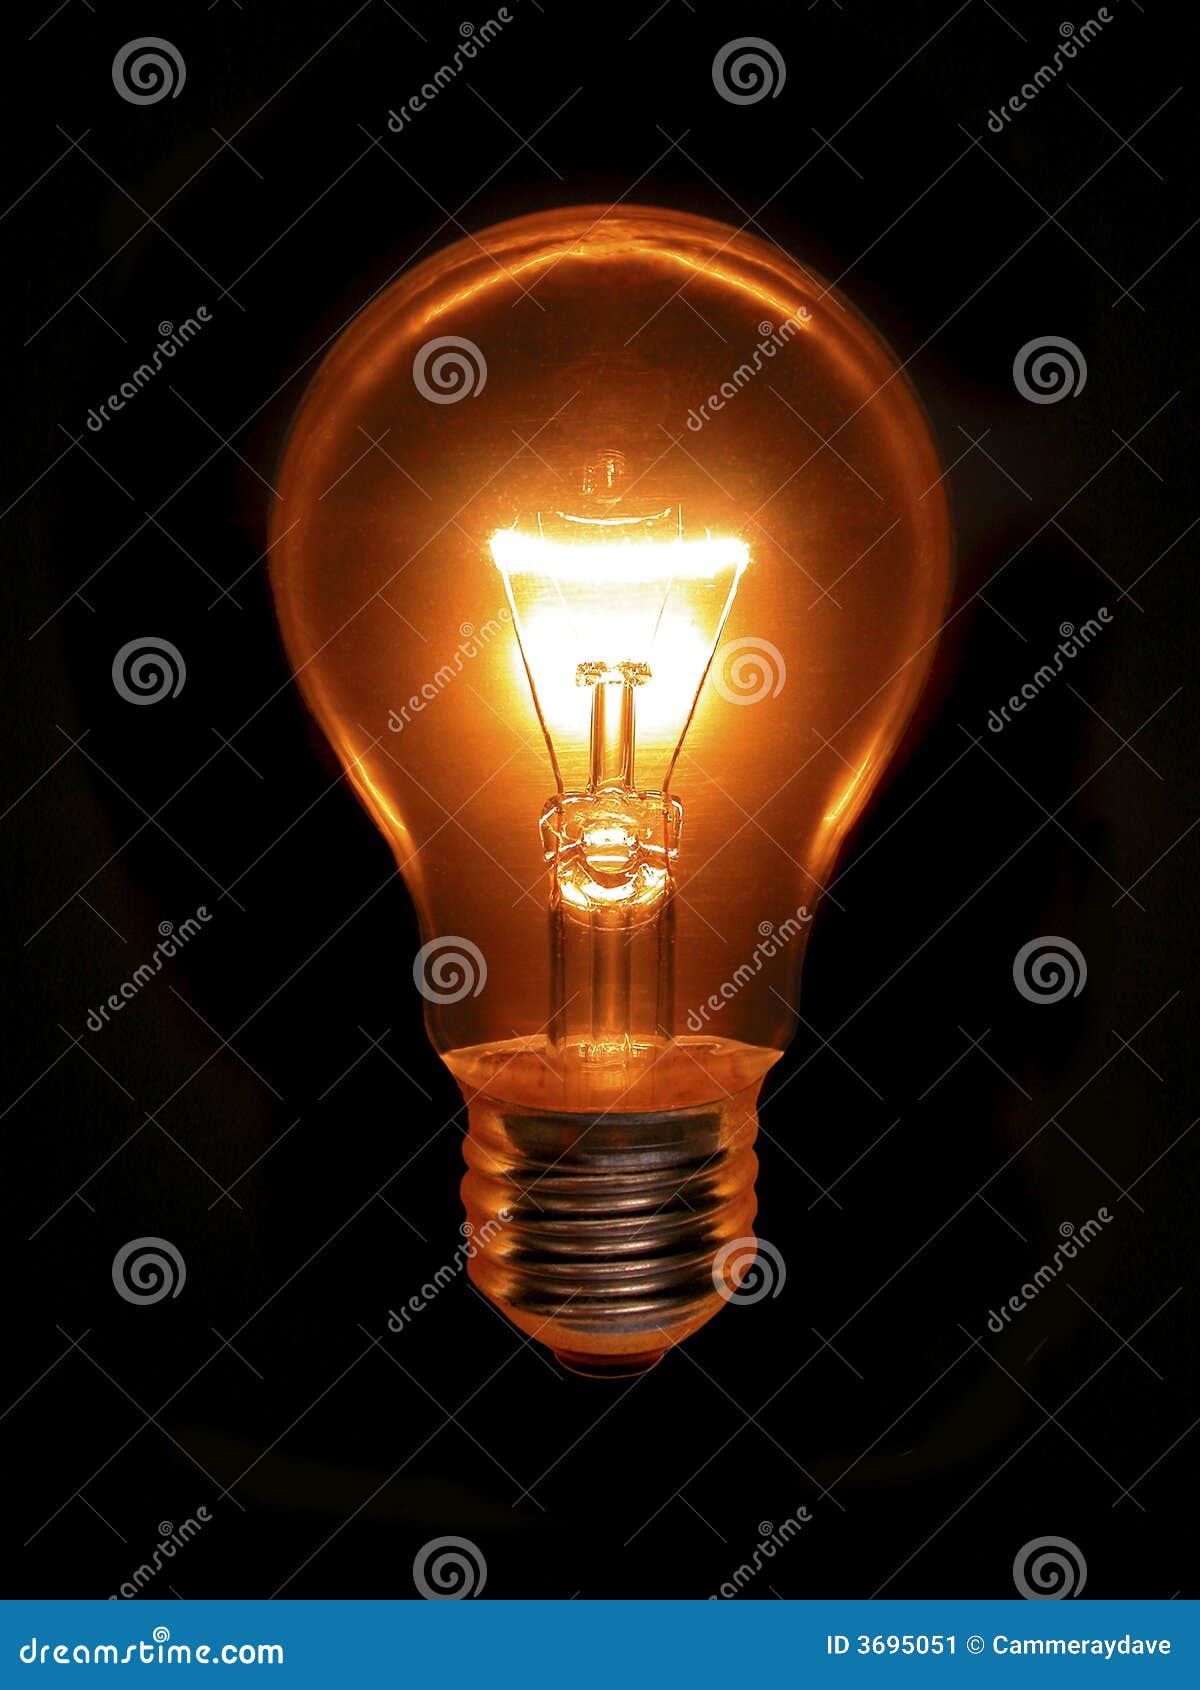 lightbulb ideas